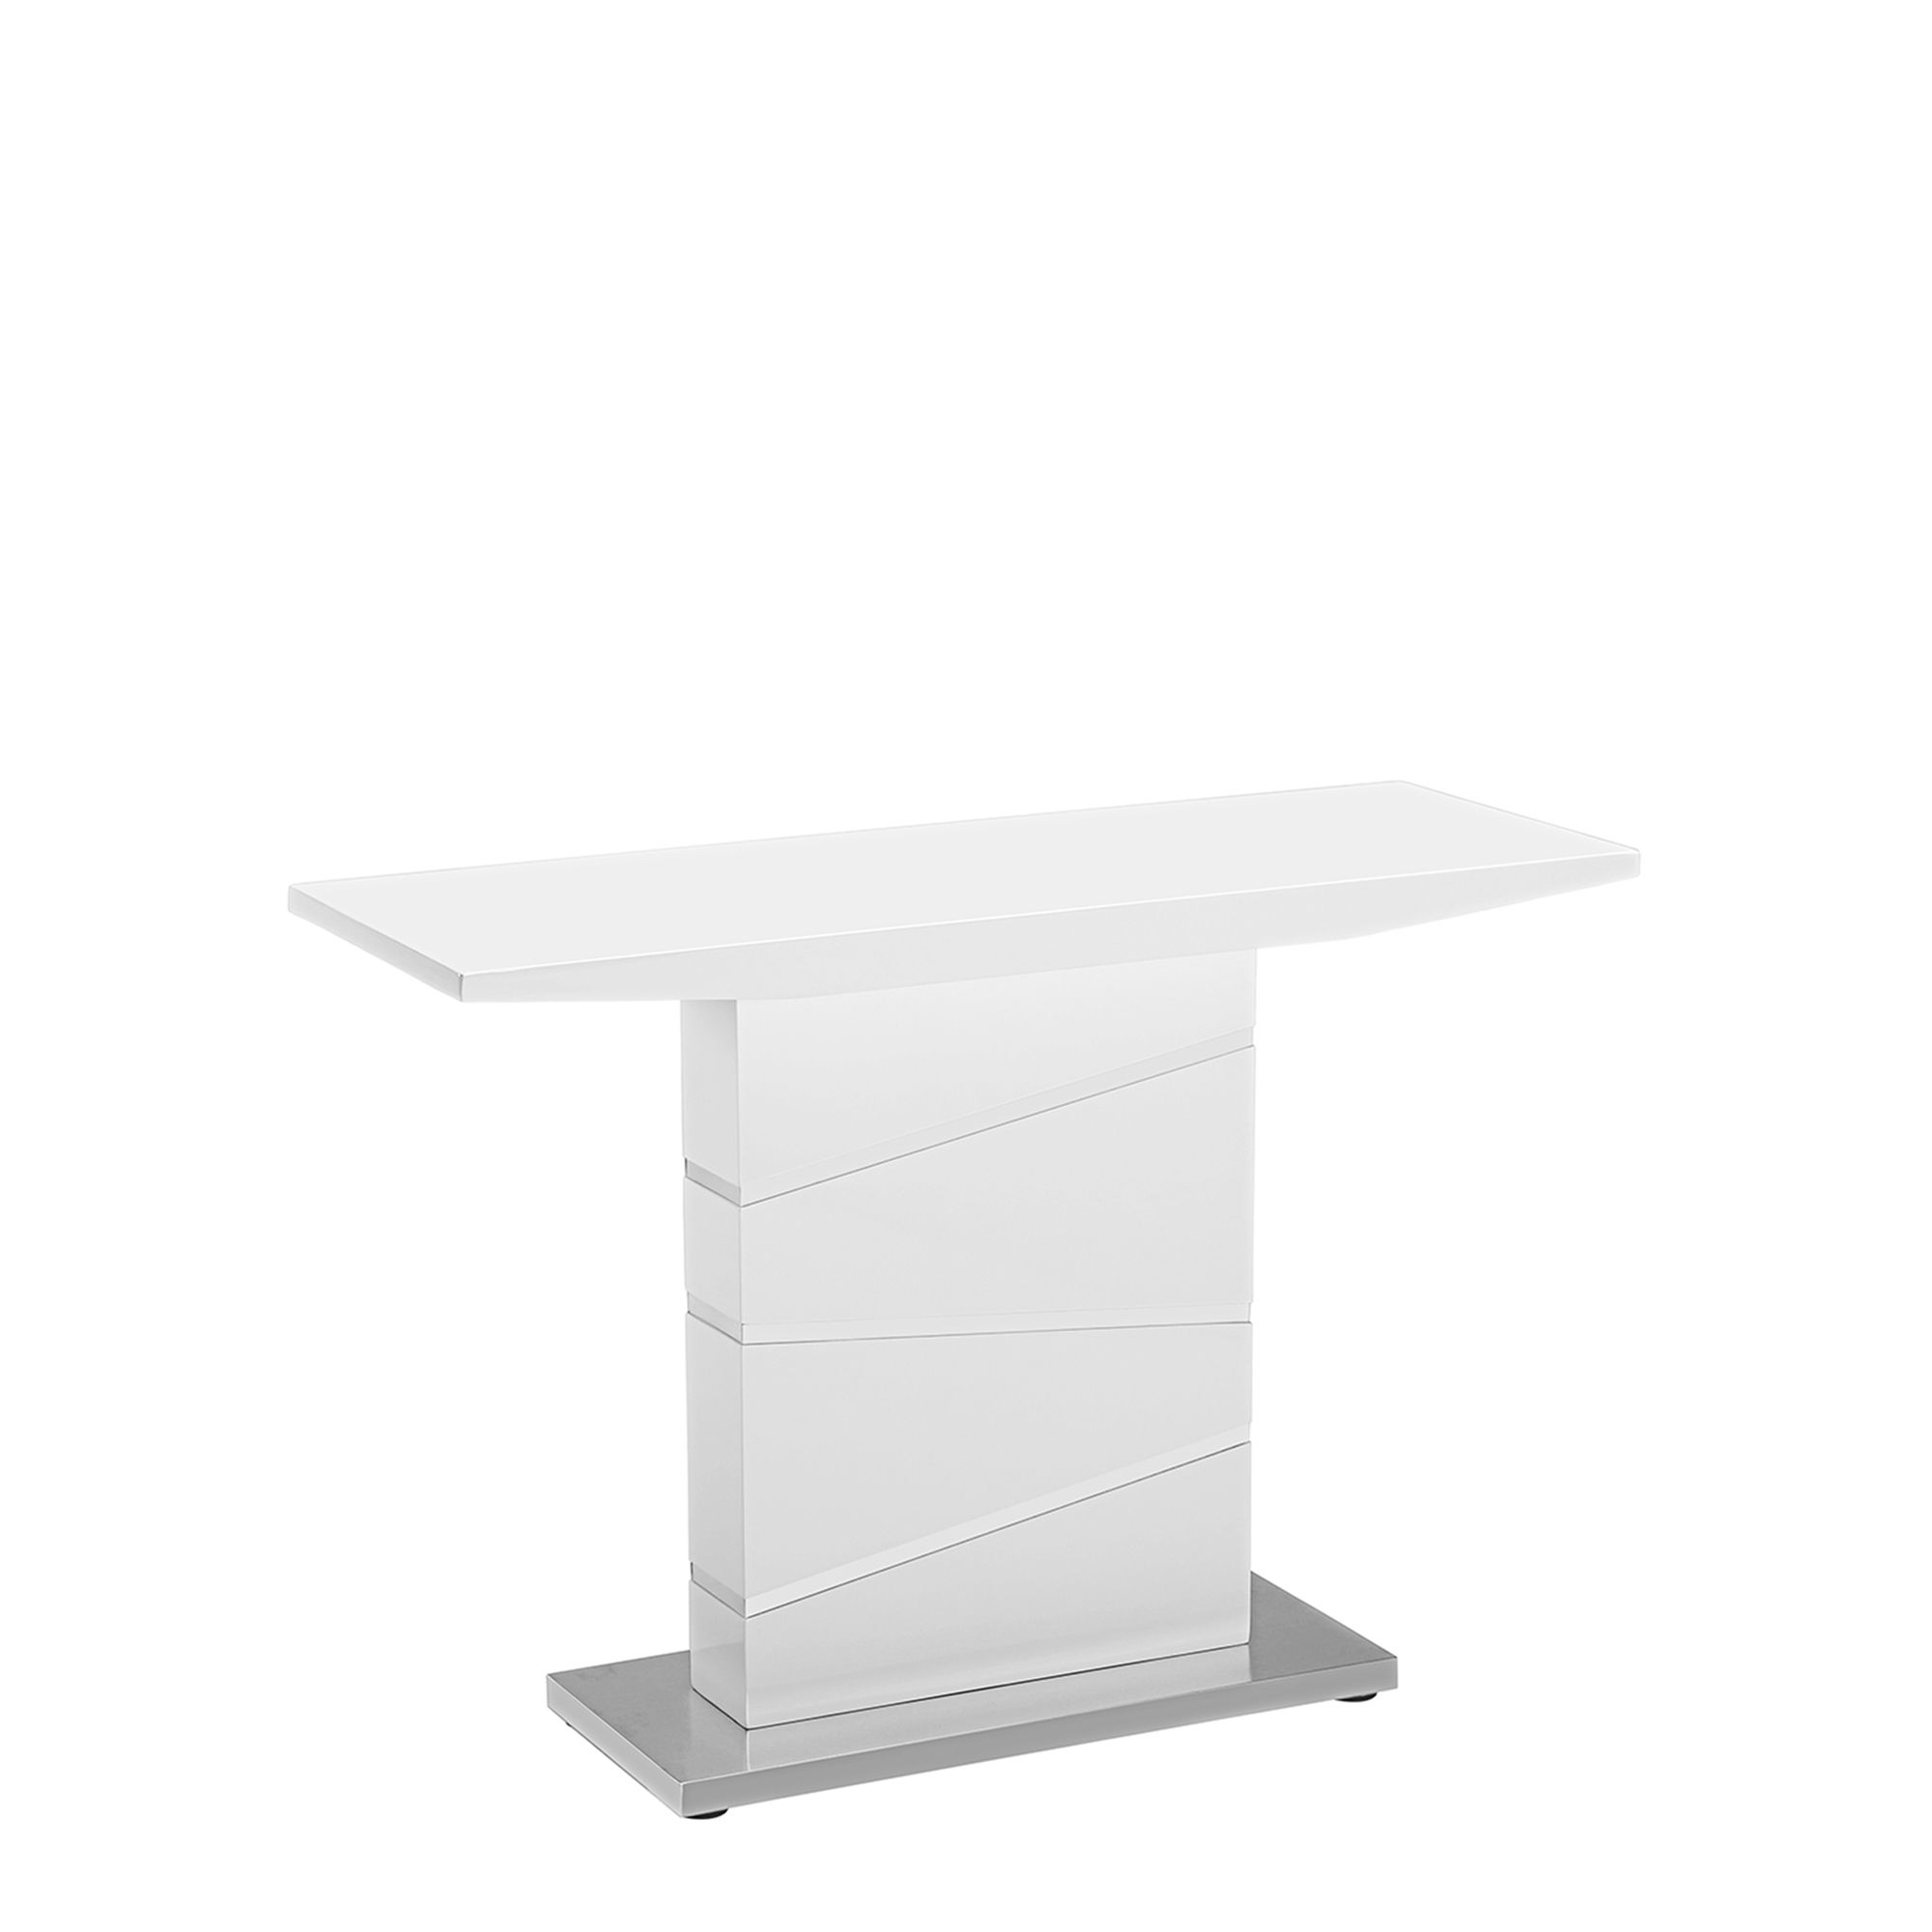 Artemis – White Gloss Console Table – Fishpools Intended For Gloss White Steel Console Tables (View 16 of 20)